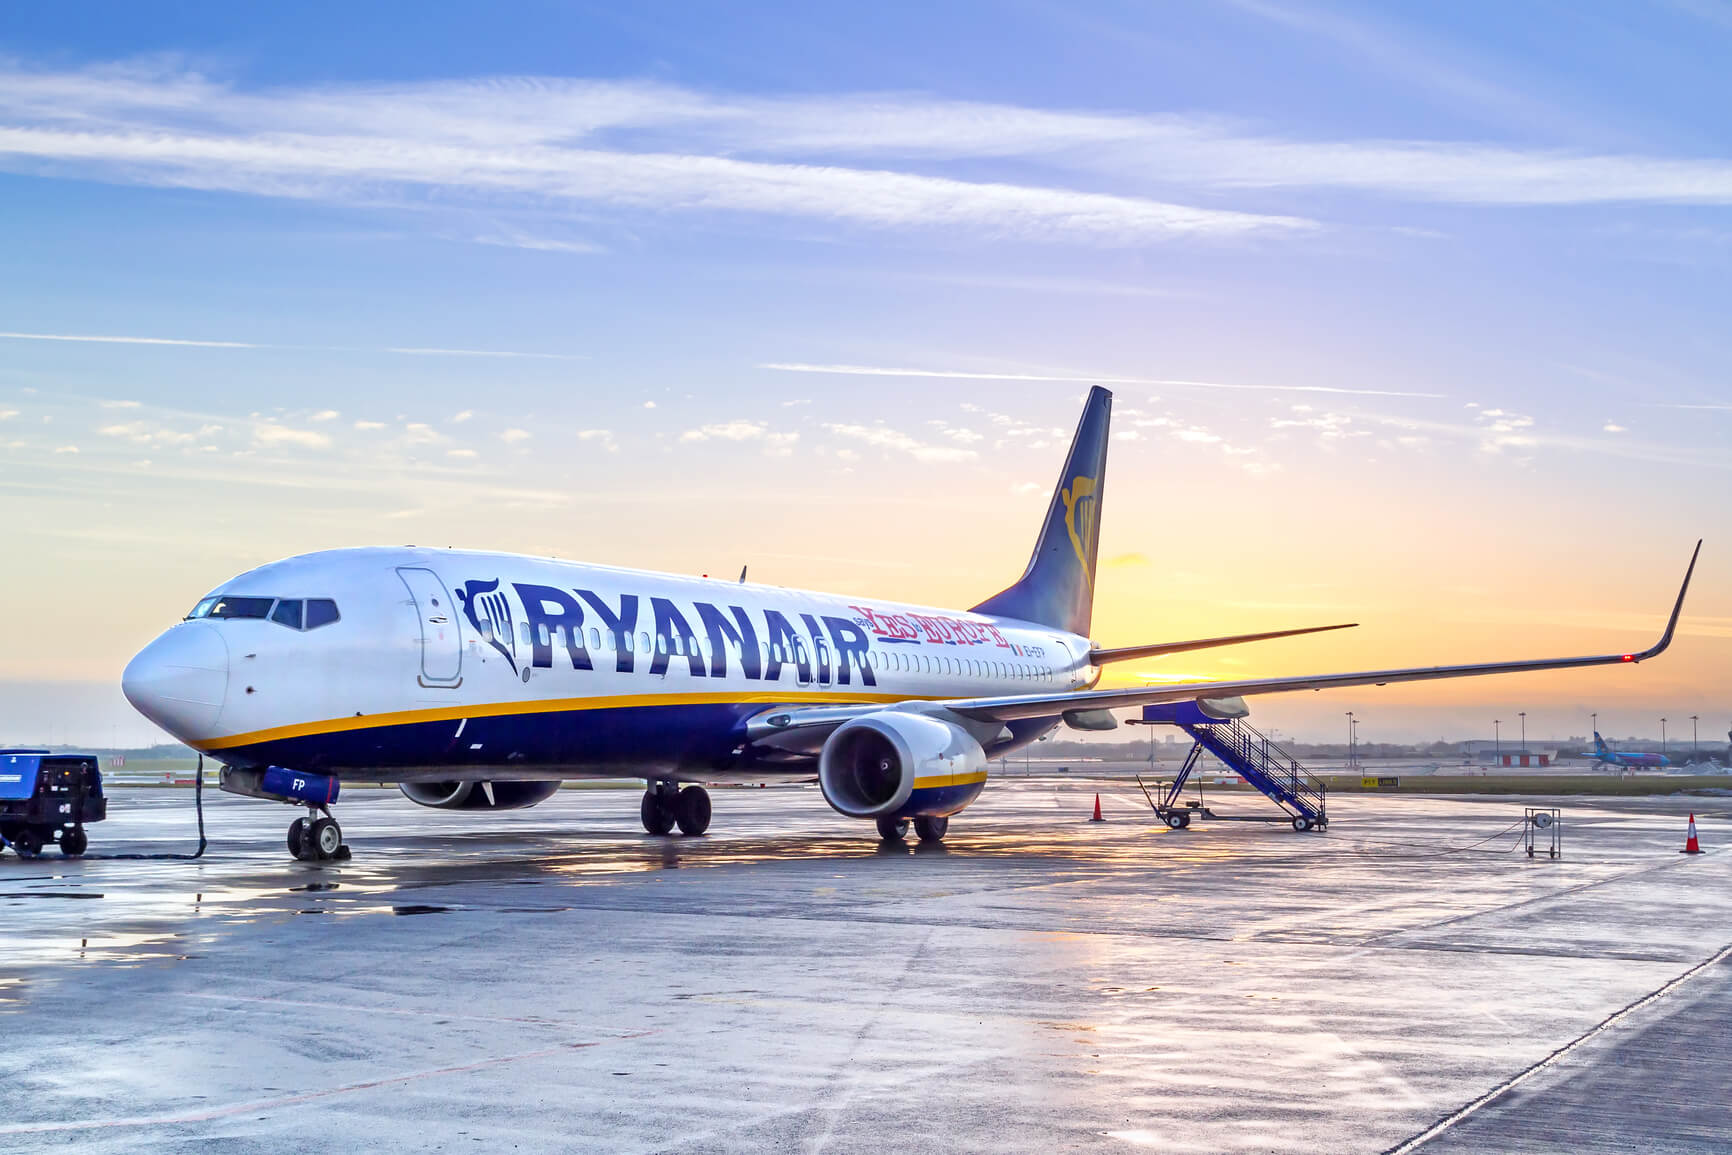 Flight deals from Ireland to many destinations starting | Secret Flying